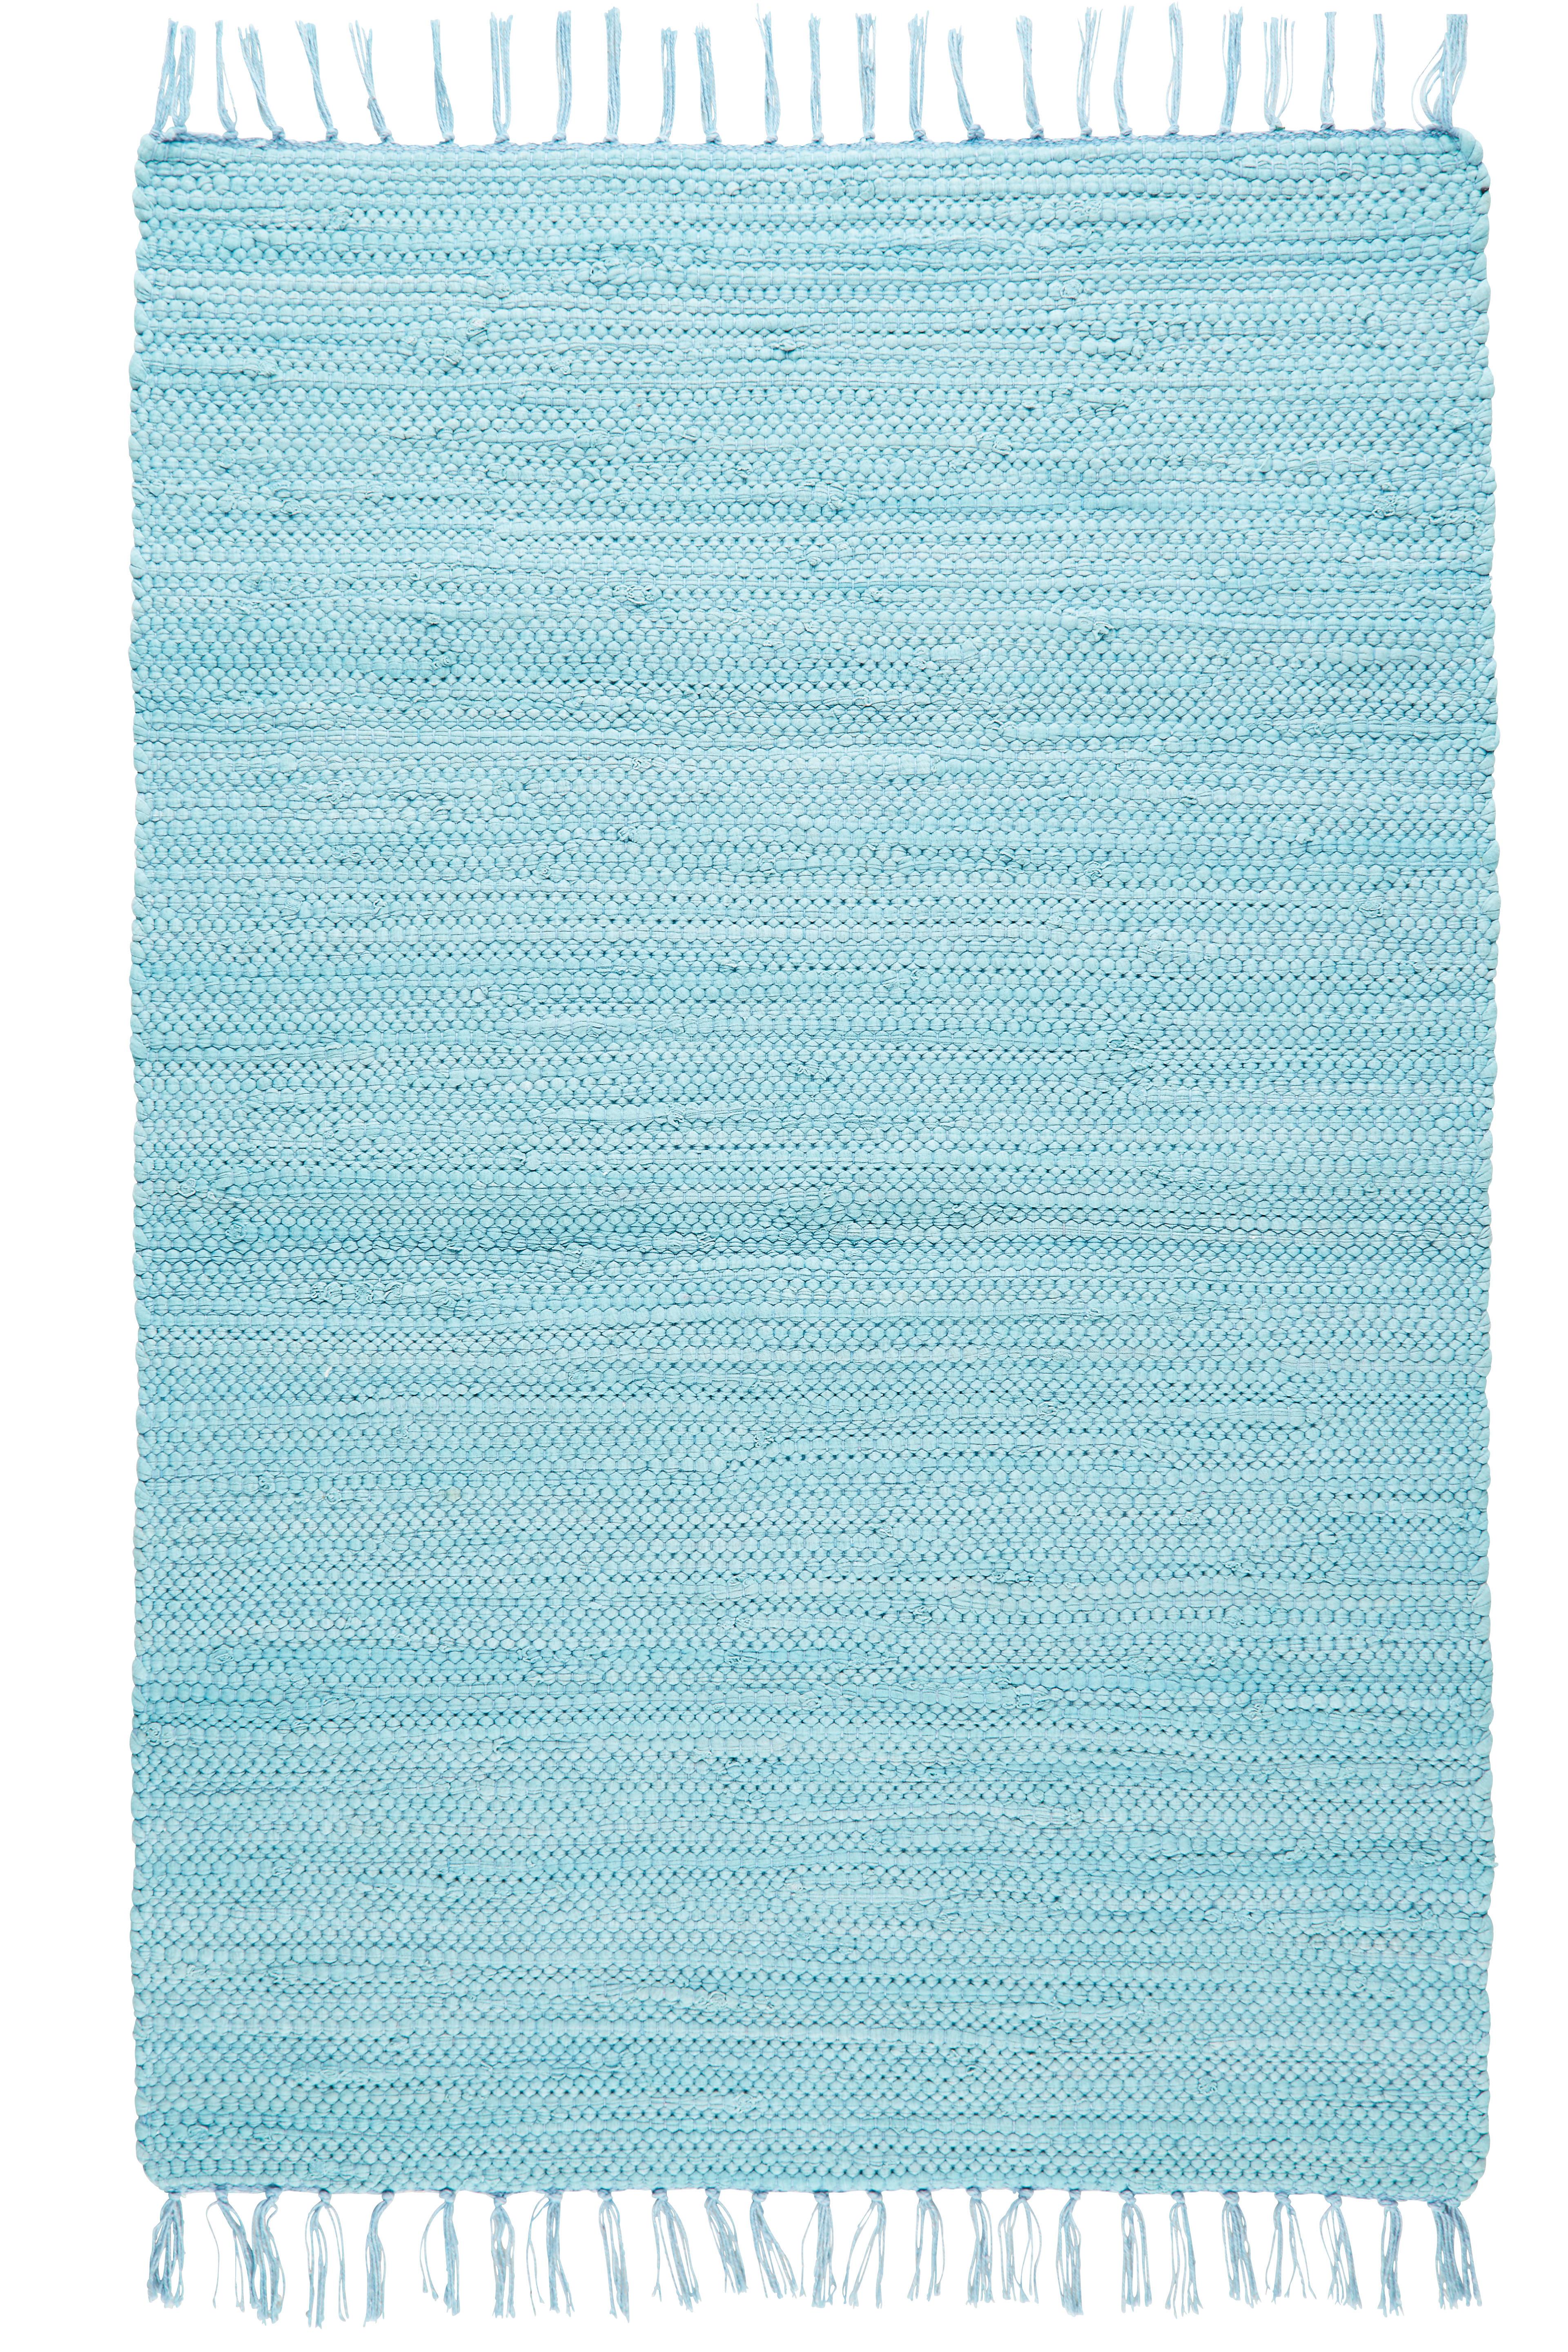 Fleckerlteppich Julia 2 in Hellblau ca. 70x130cm - Hellblau, ROMANTIK / LANDHAUS, Textil (70/130cm) - Modern Living